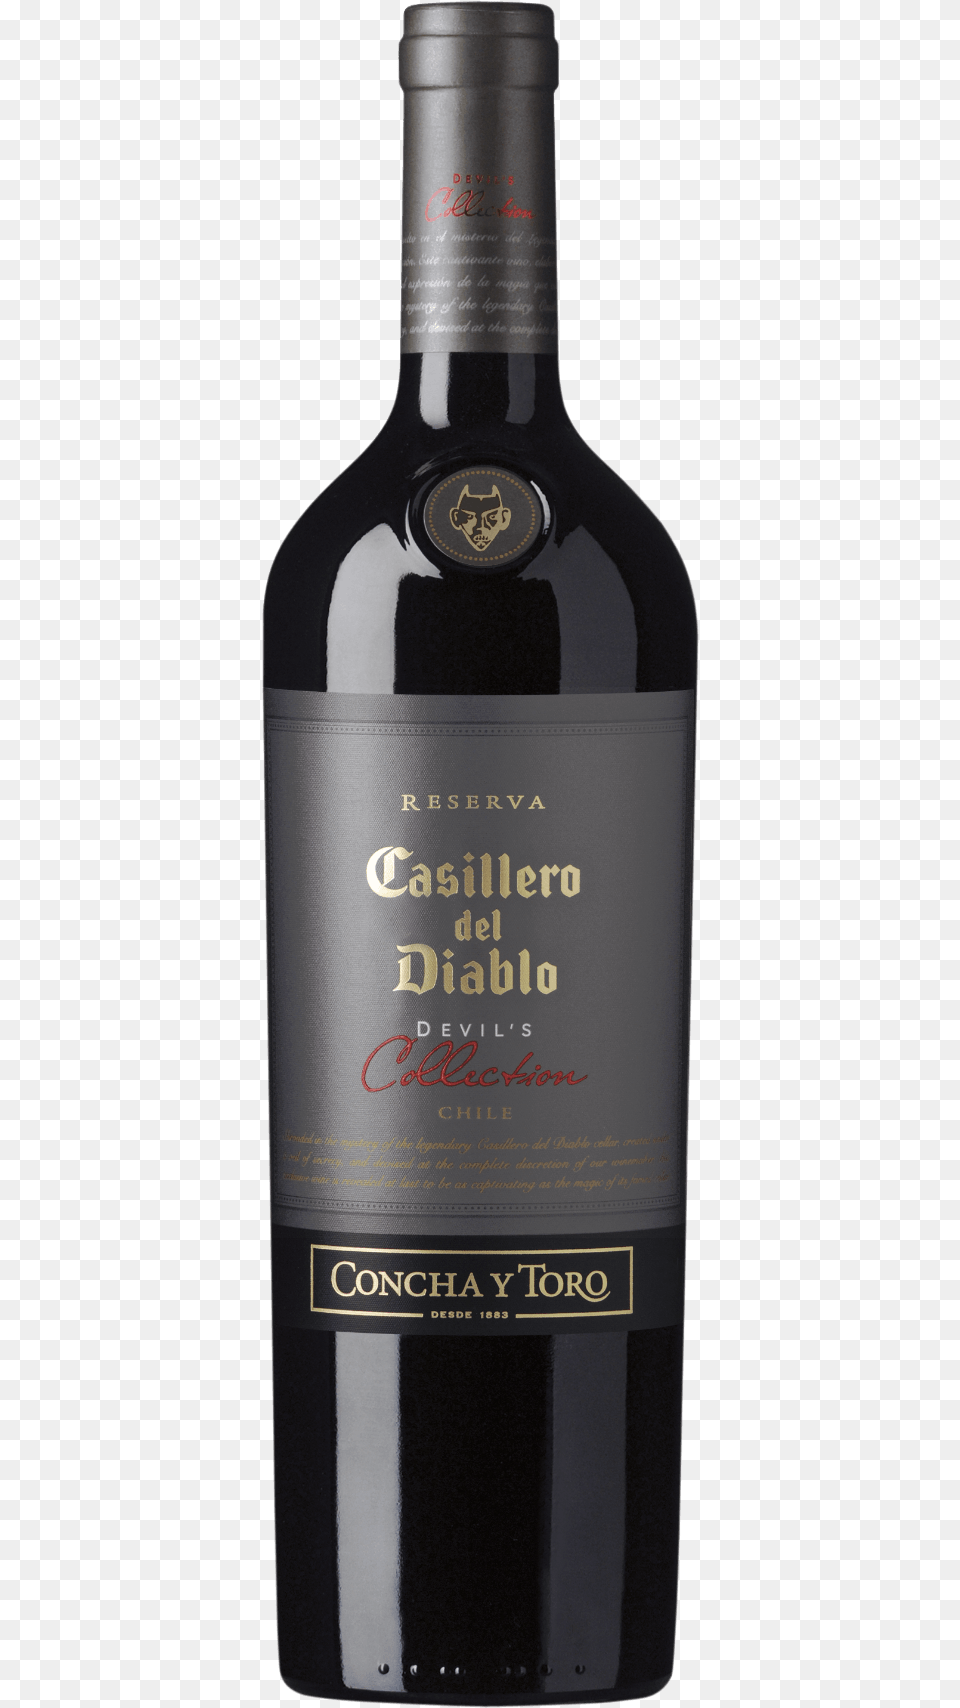 Concha Y Toro Devil S Collection Red 2016 Bottle Casillero Del Diablo Devils Collection, Alcohol, Beverage, Liquor, Beer Free Png Download